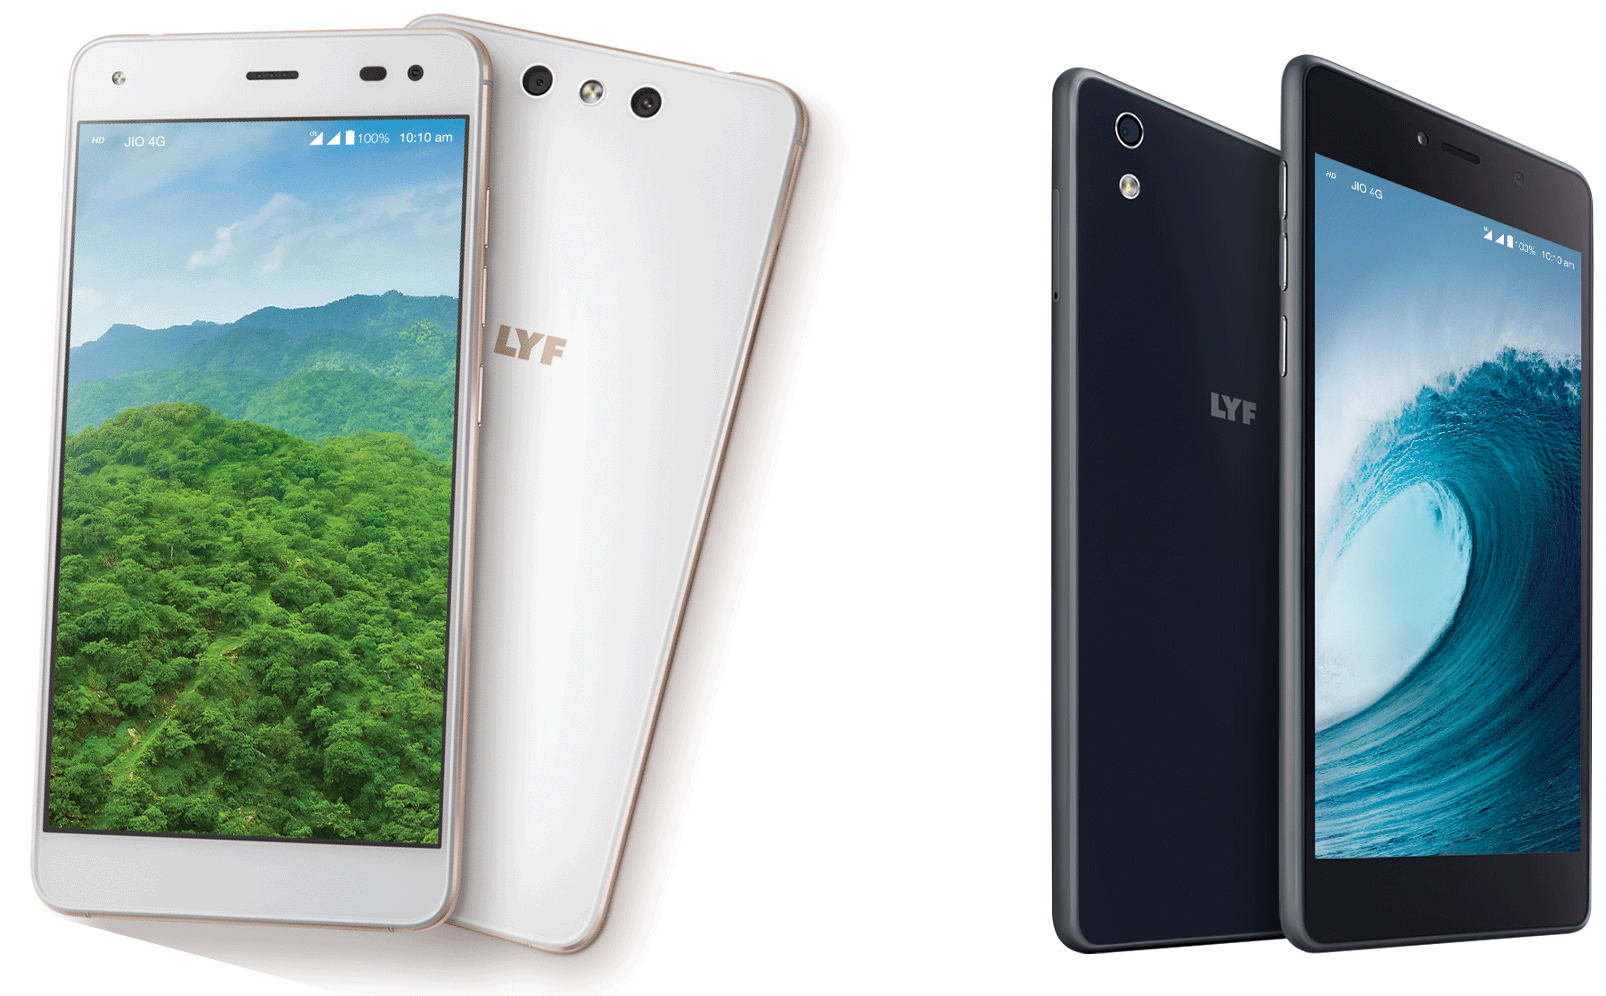 Reliance Jio LYF Phones